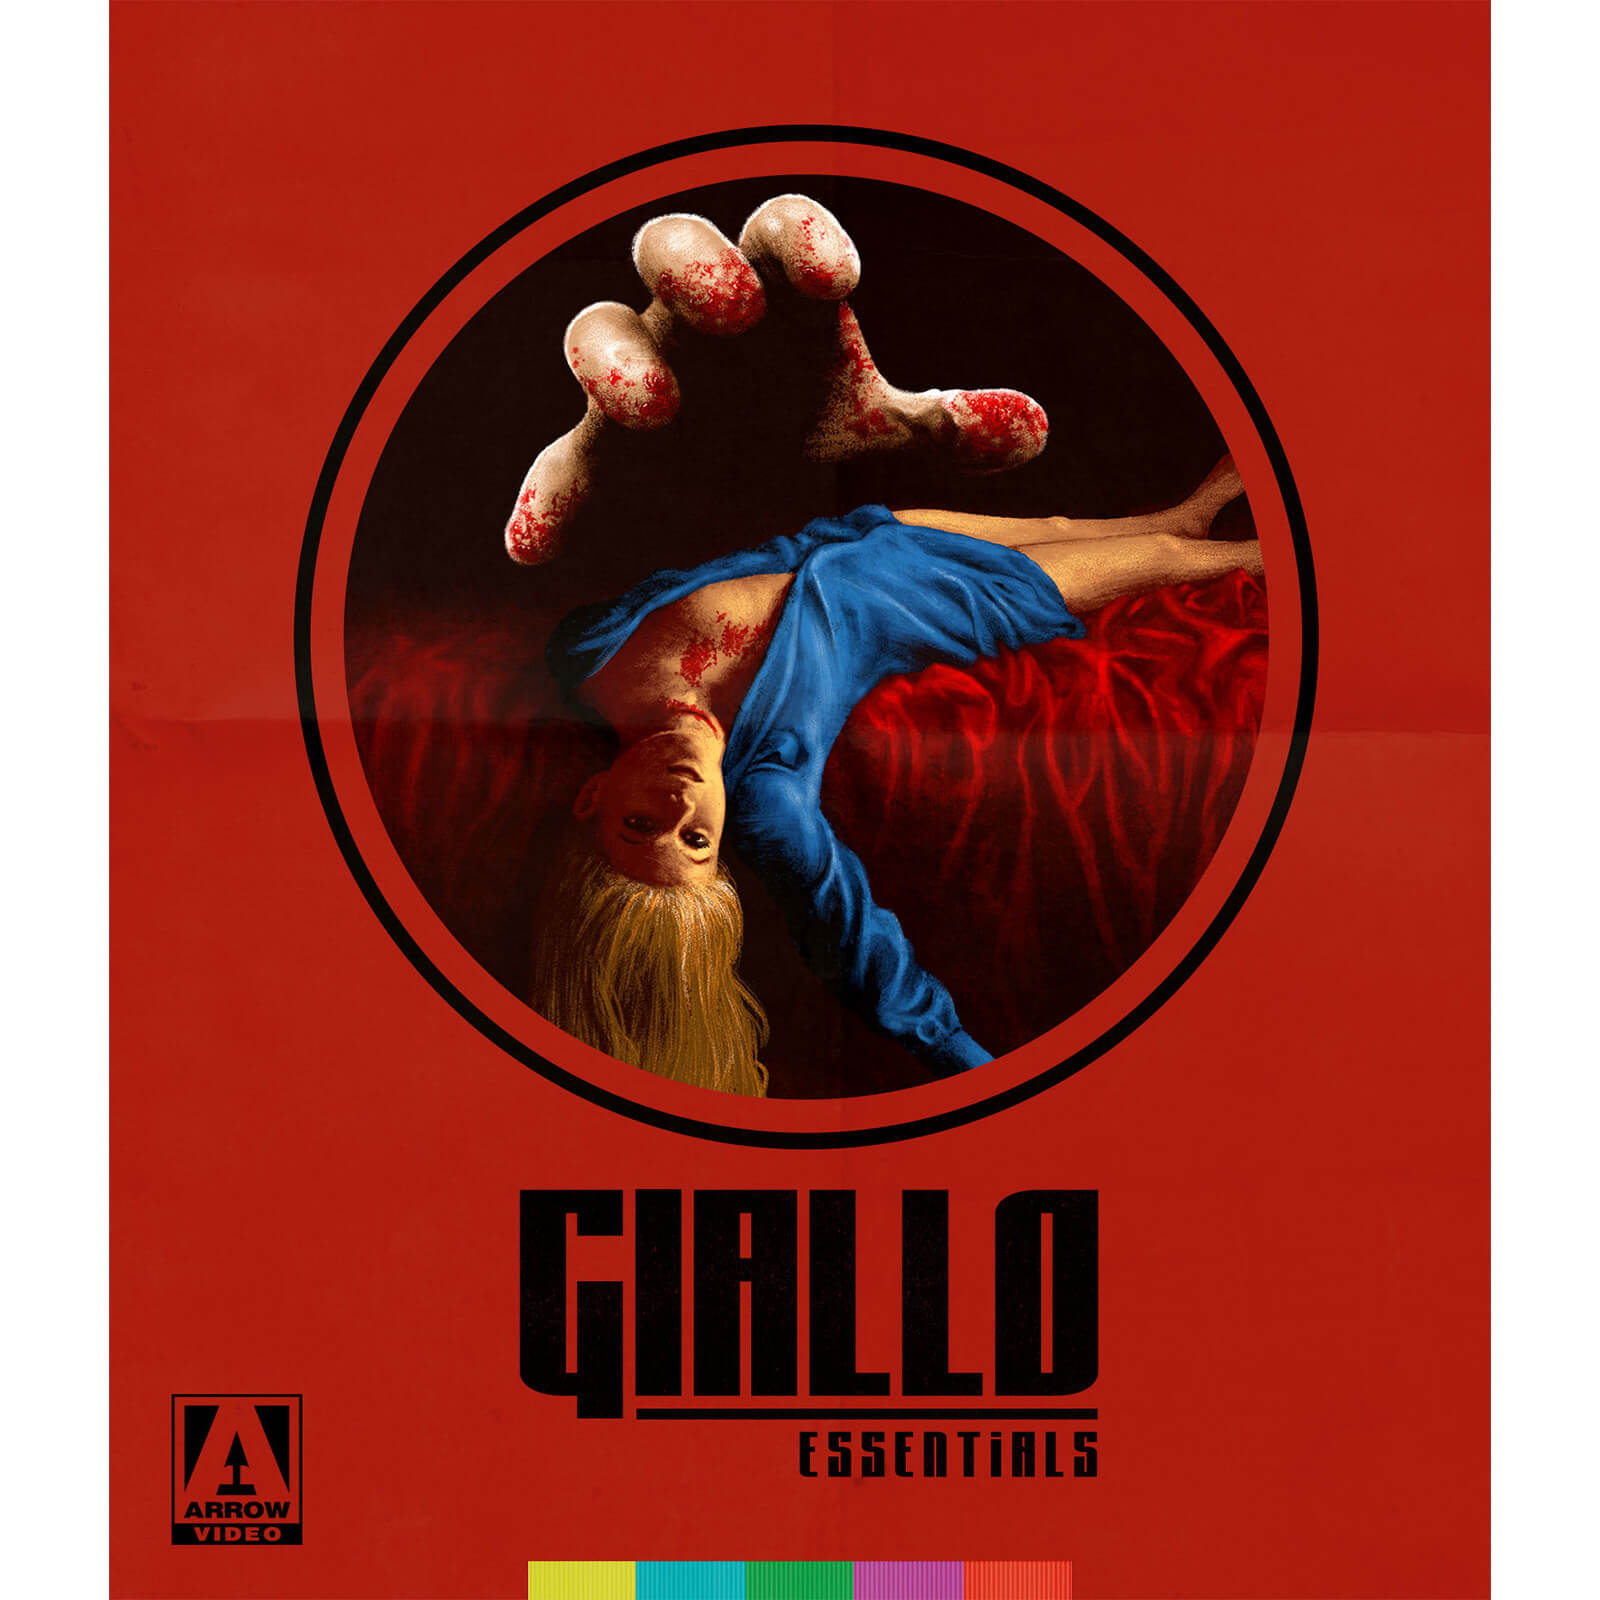 Giallo Essentials (Red Edition)